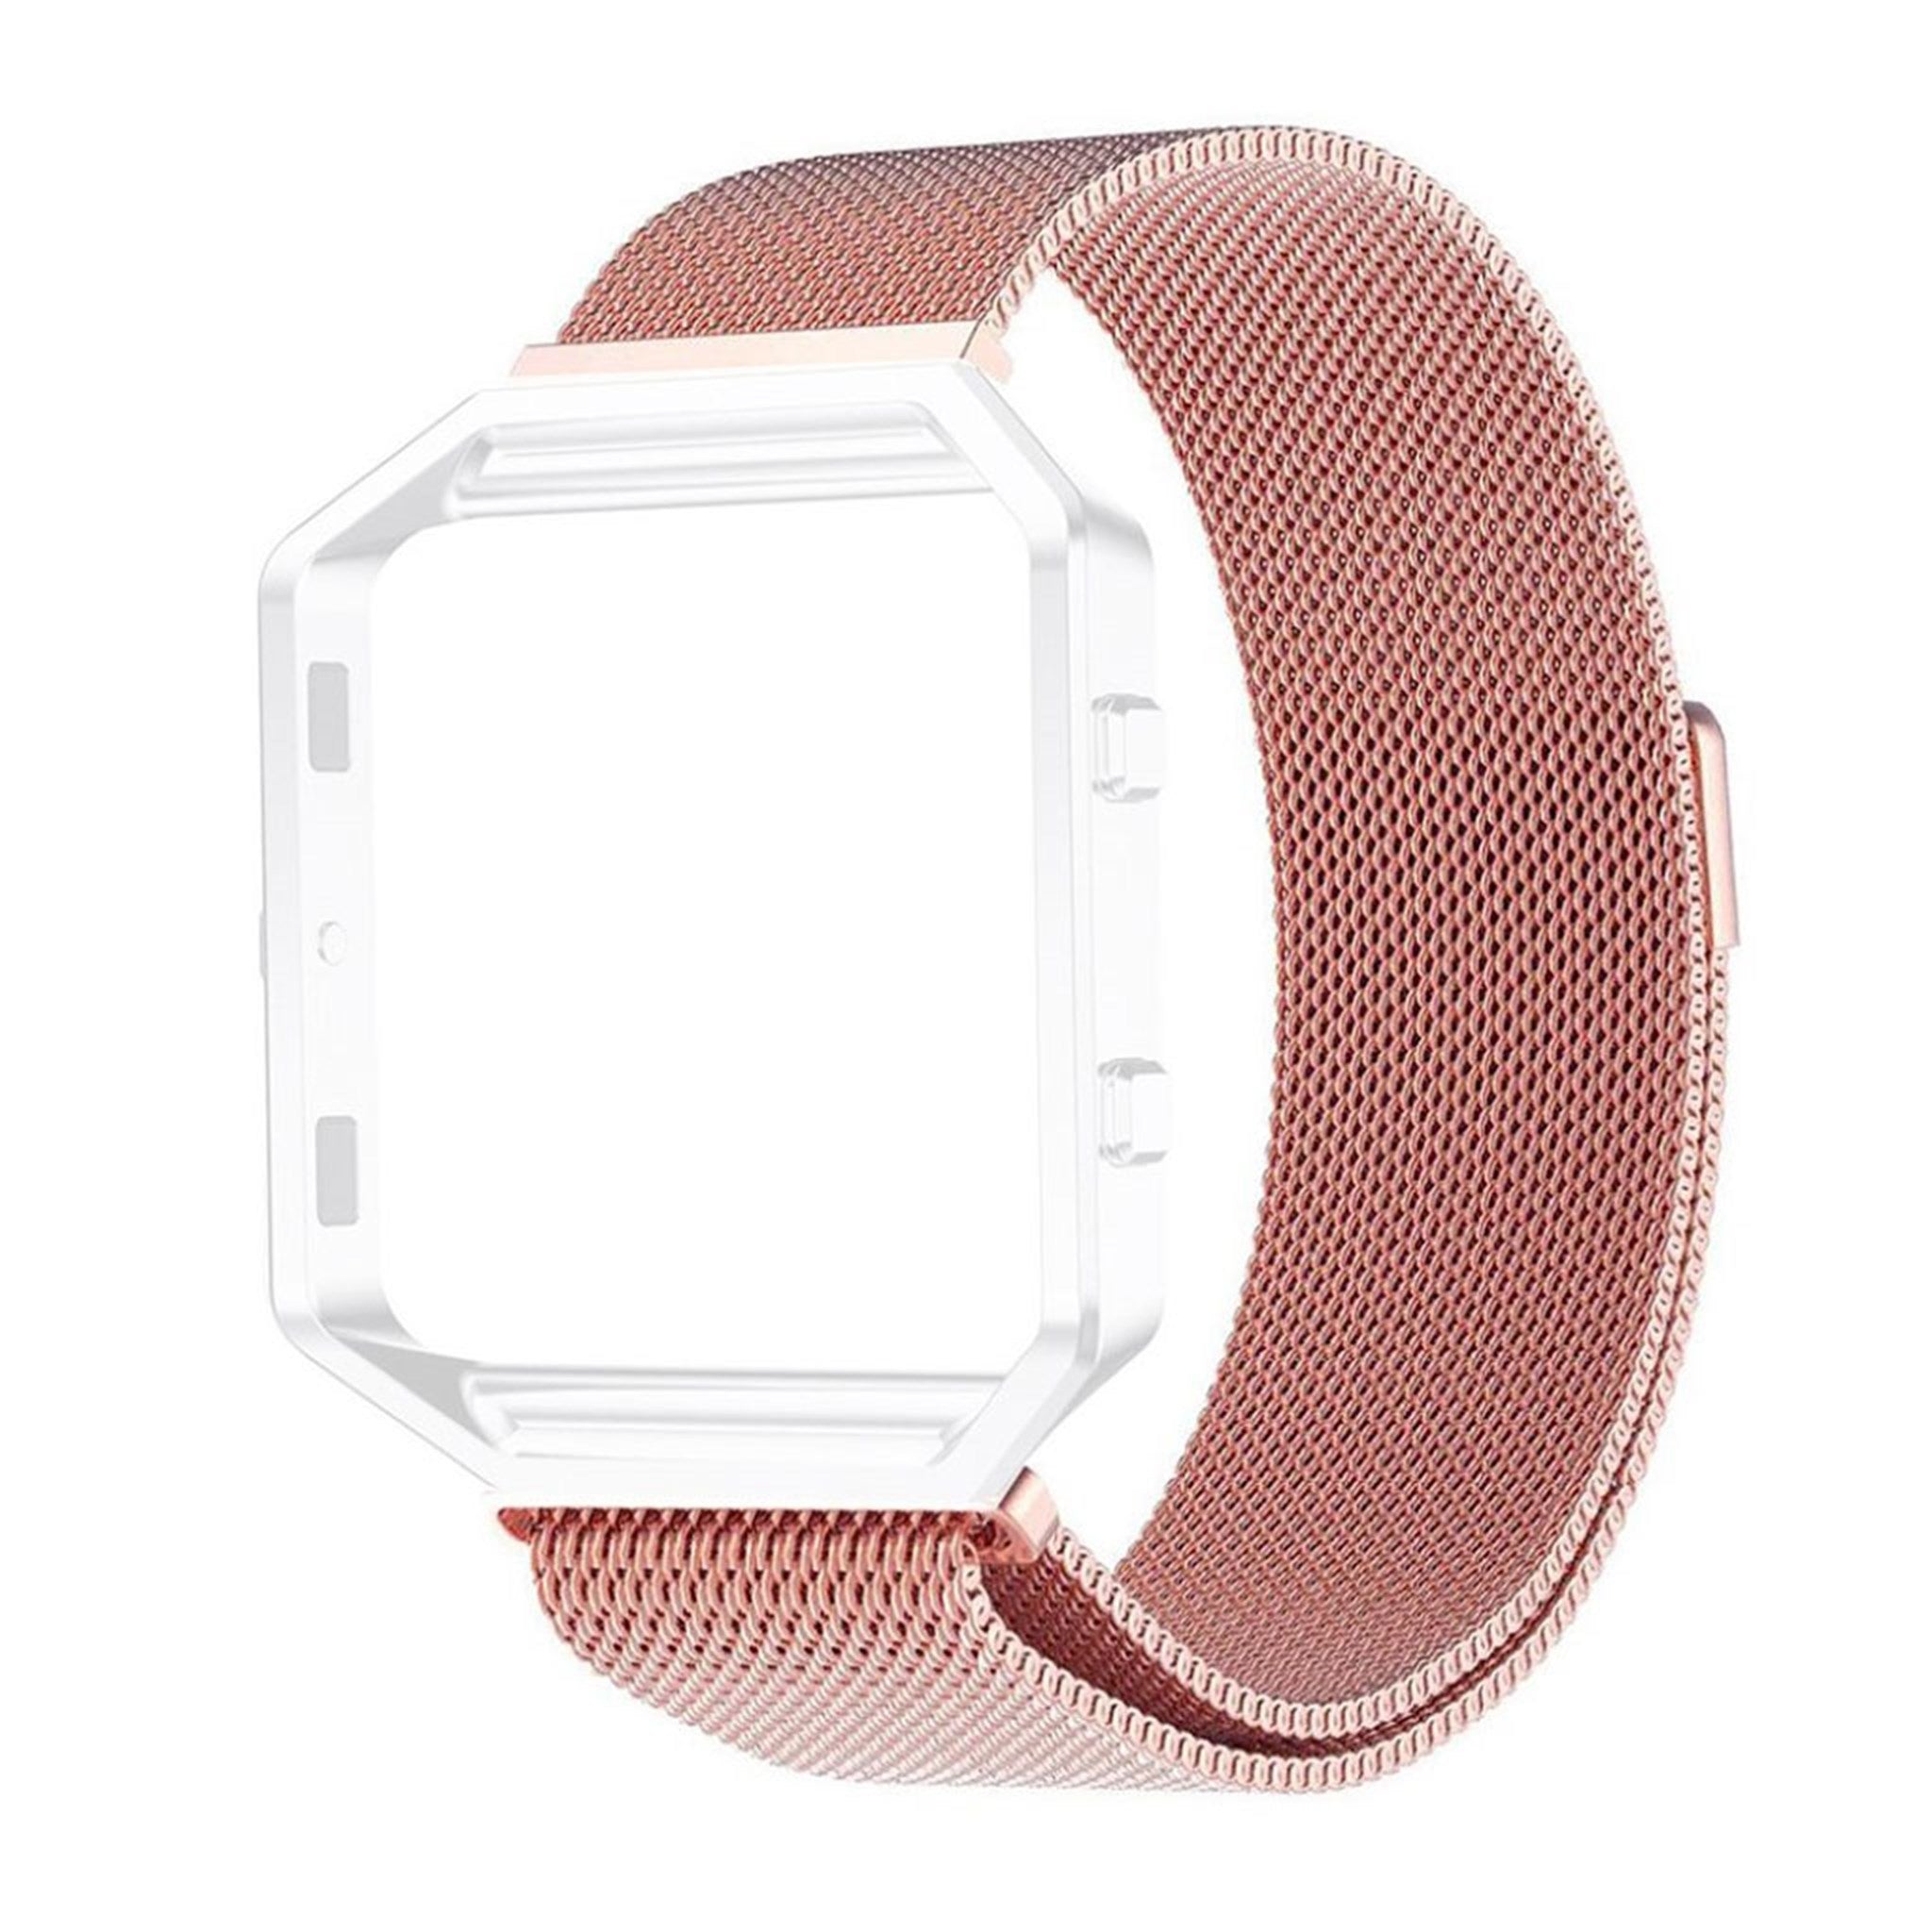 Fitbit Blaze milanese loop stainless steel watch strap- Pink